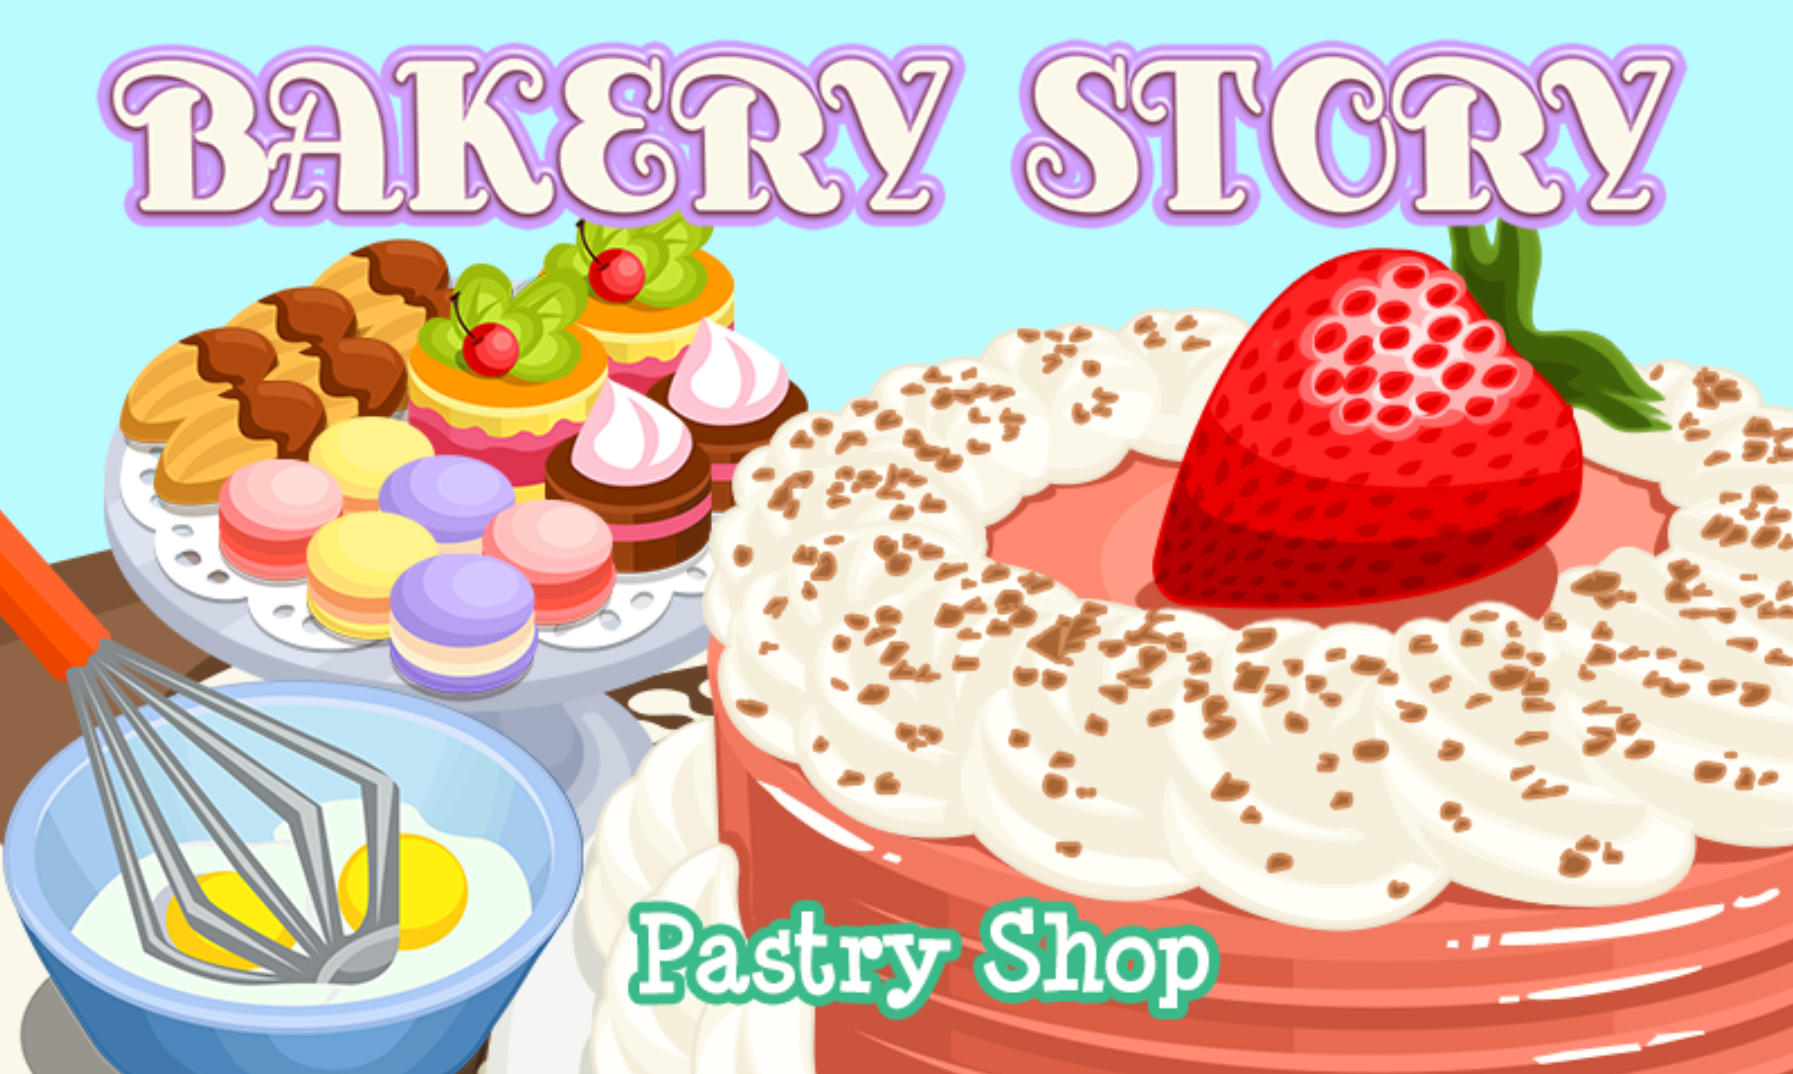 Winter wedding cake bakery story